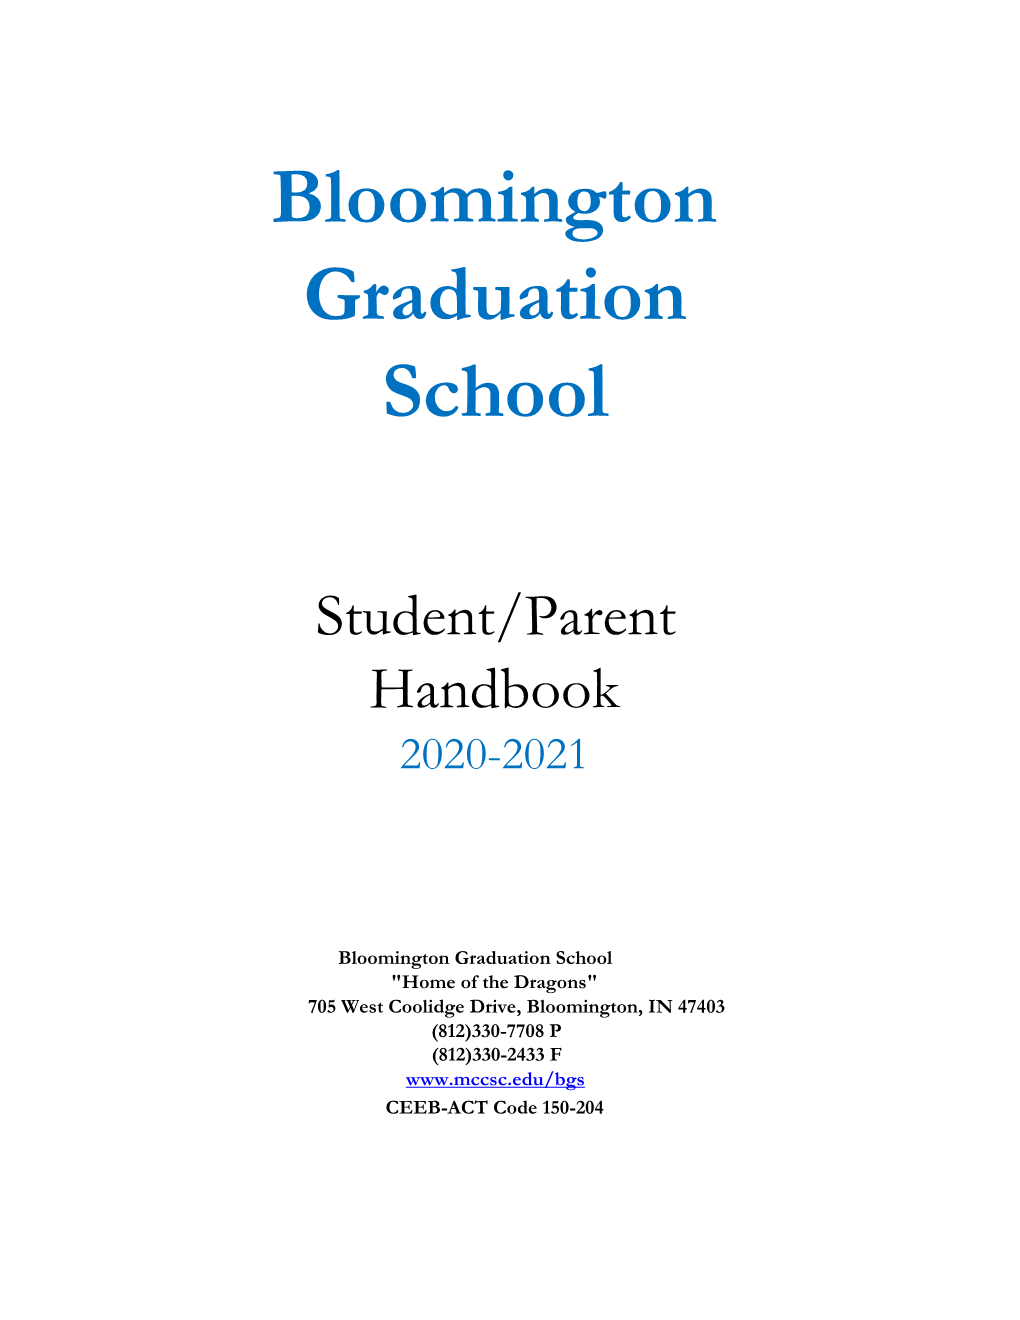 Bloomington Graduation School